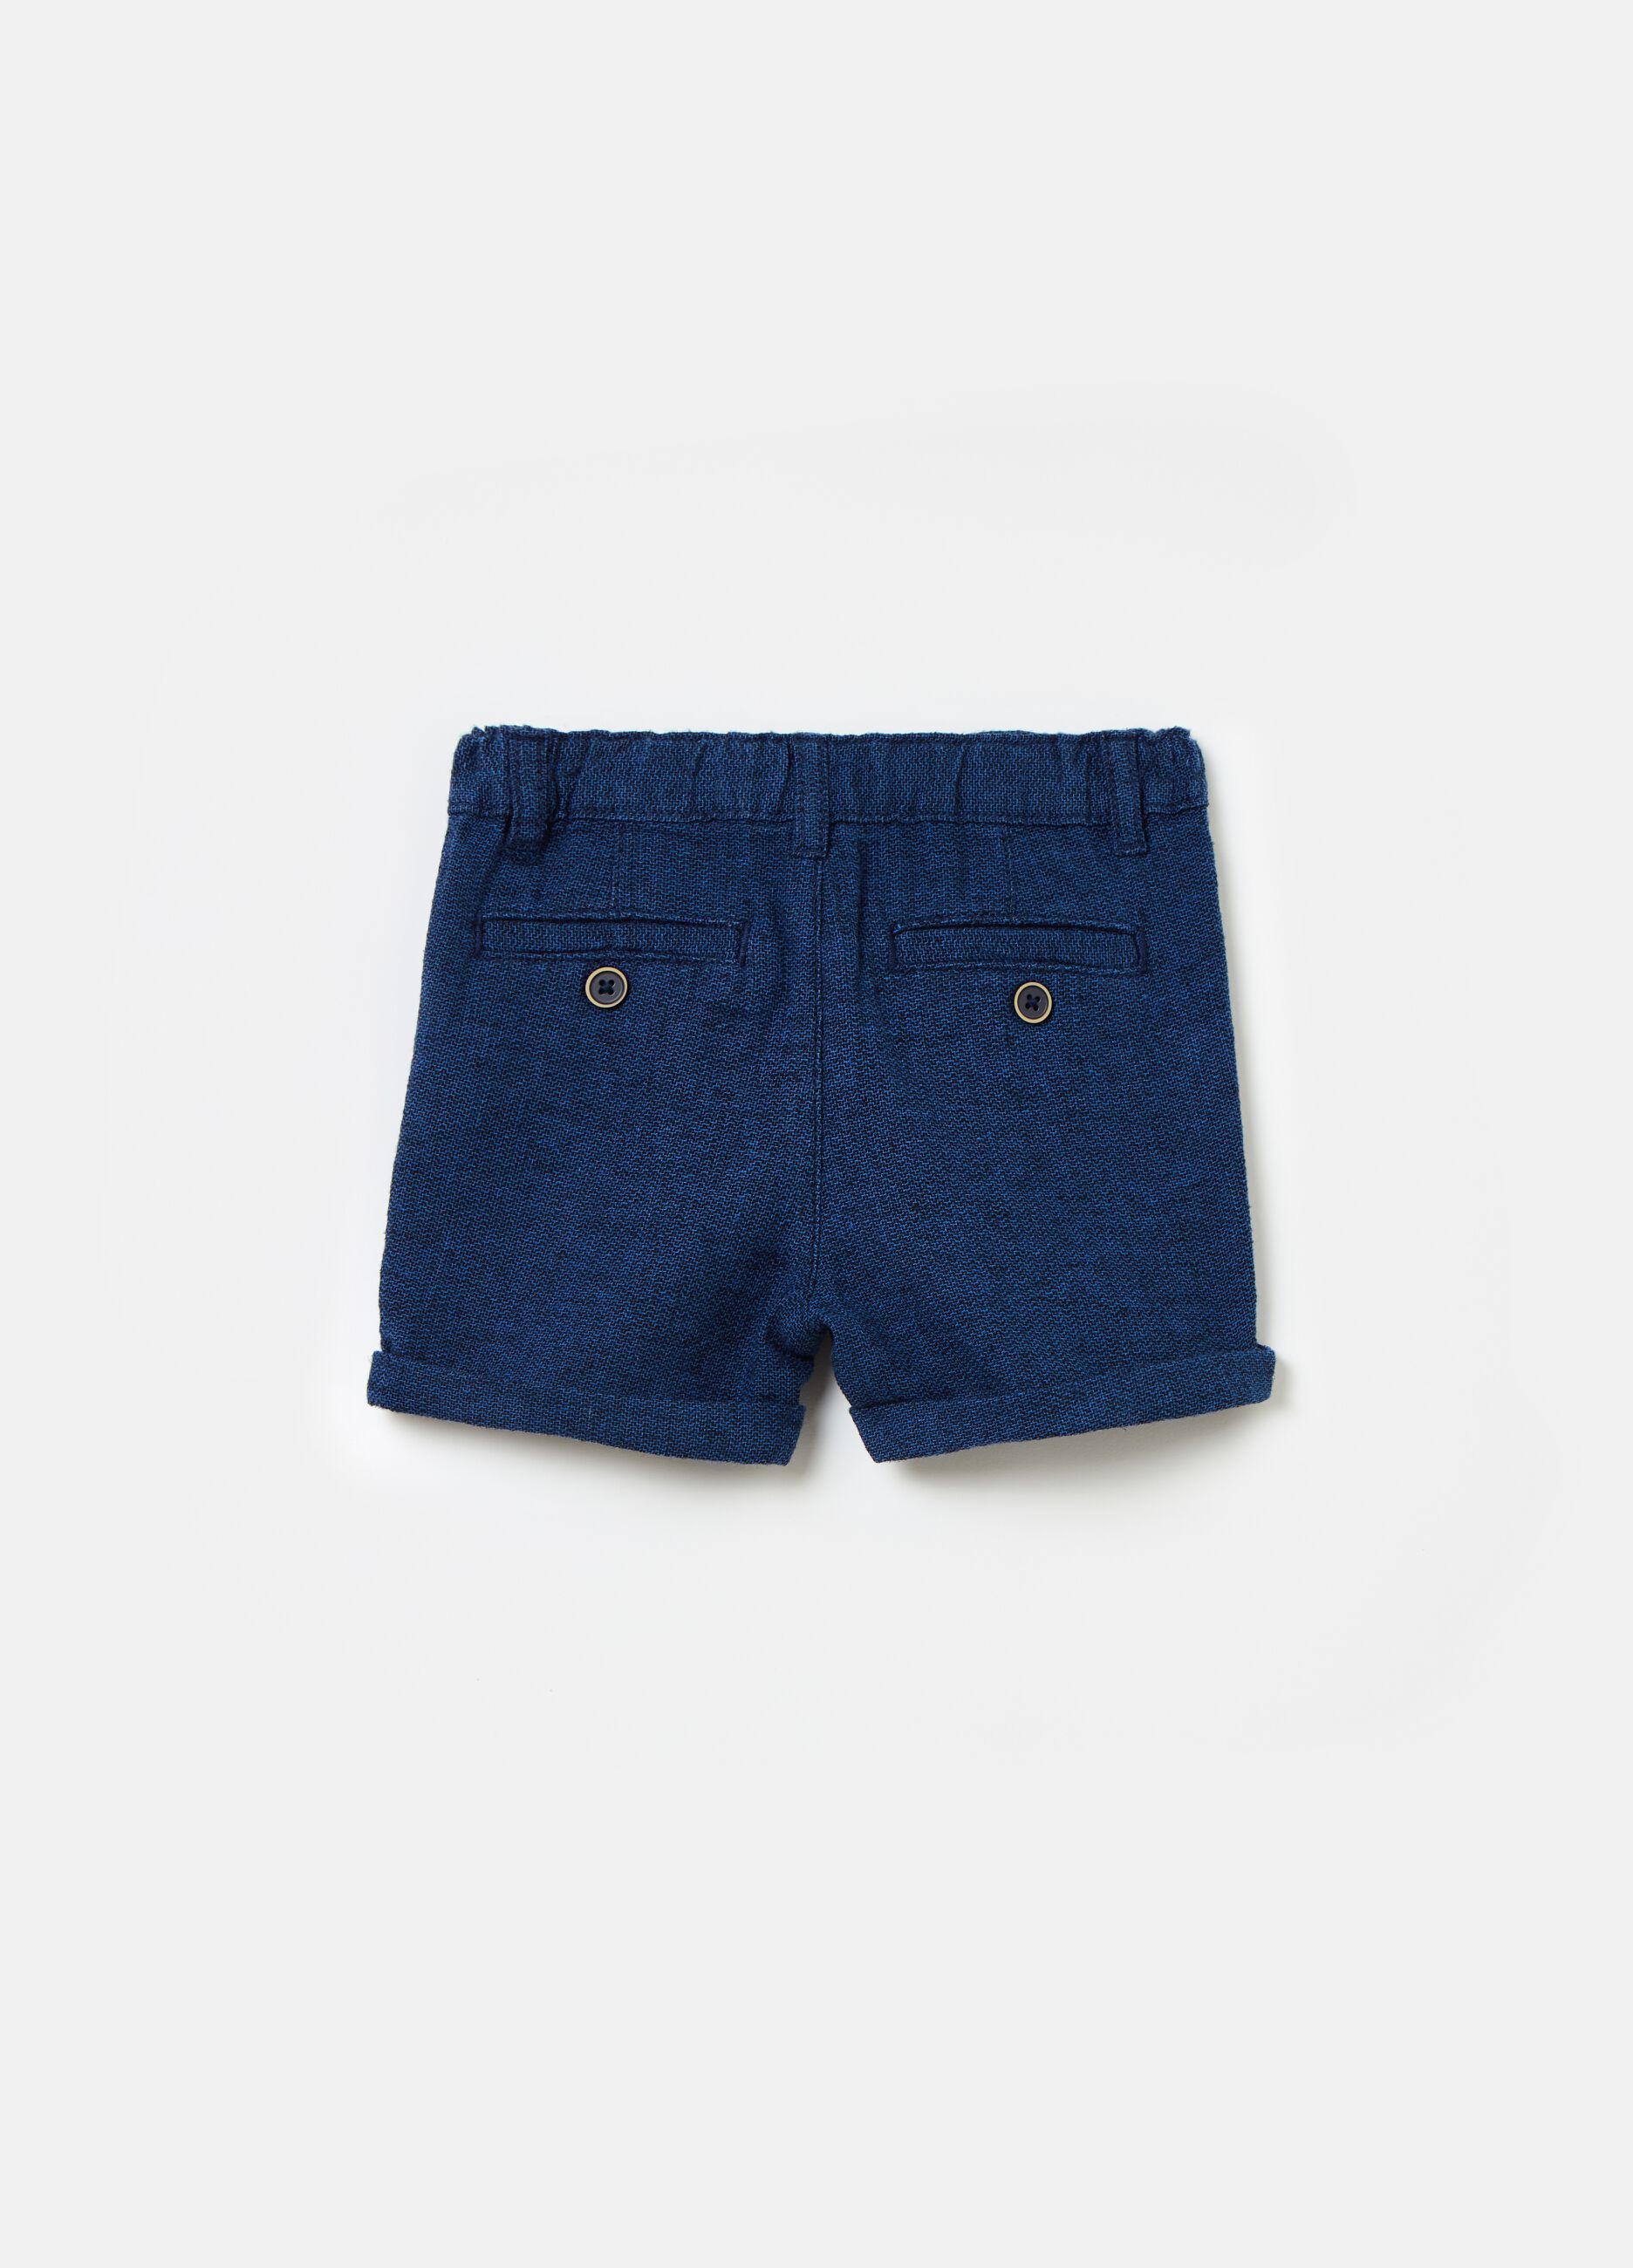 Linen and cotton Bermuda shorts